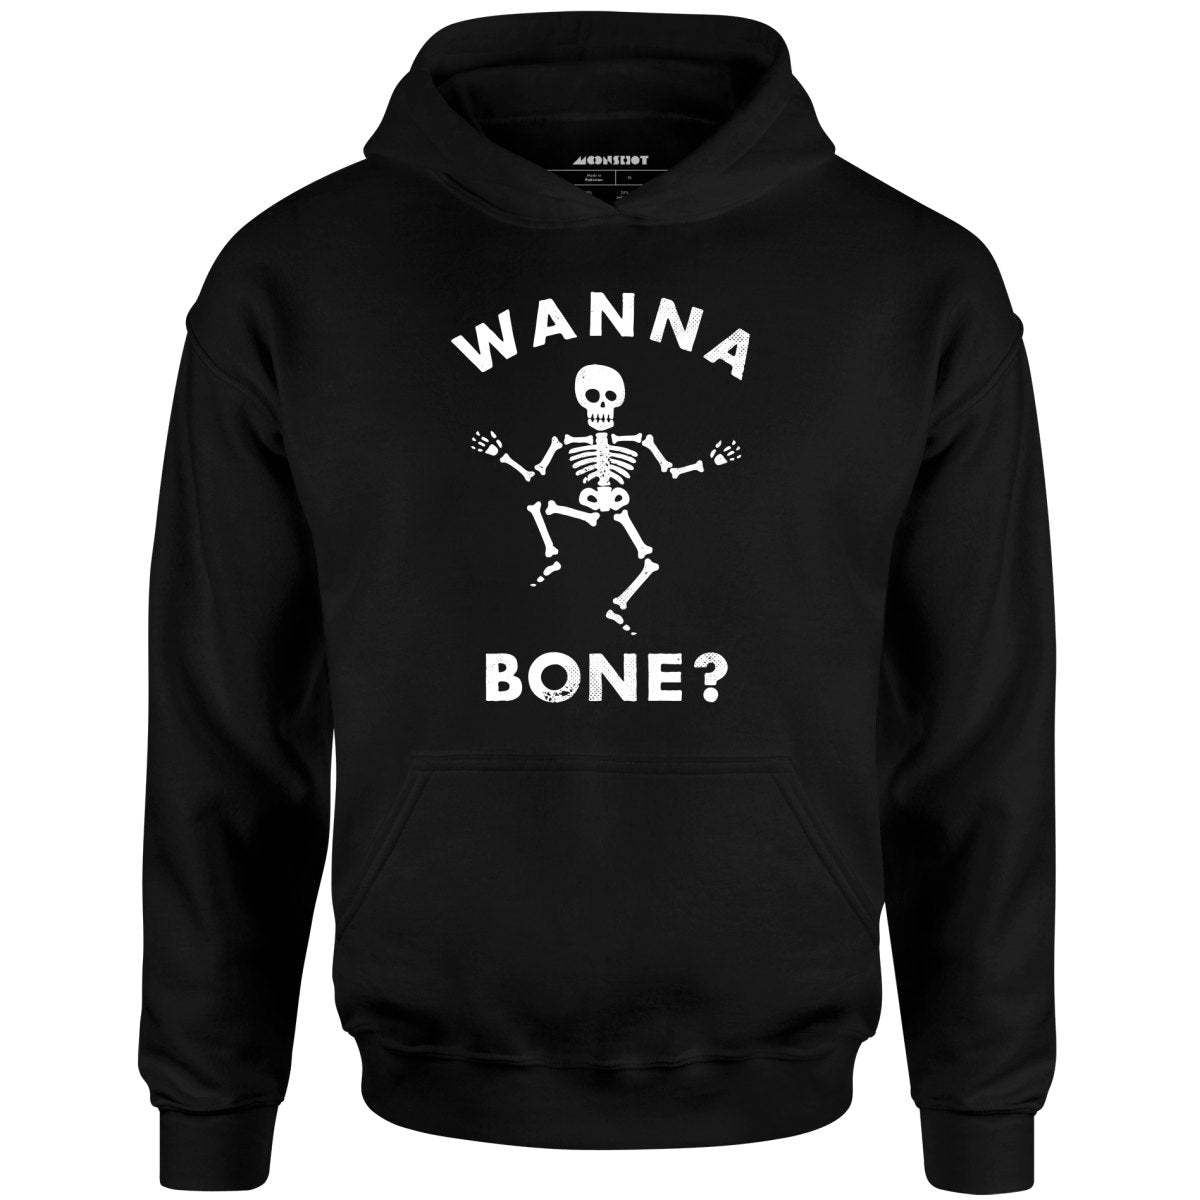 Wanna Bone? - Unisex Hoodie